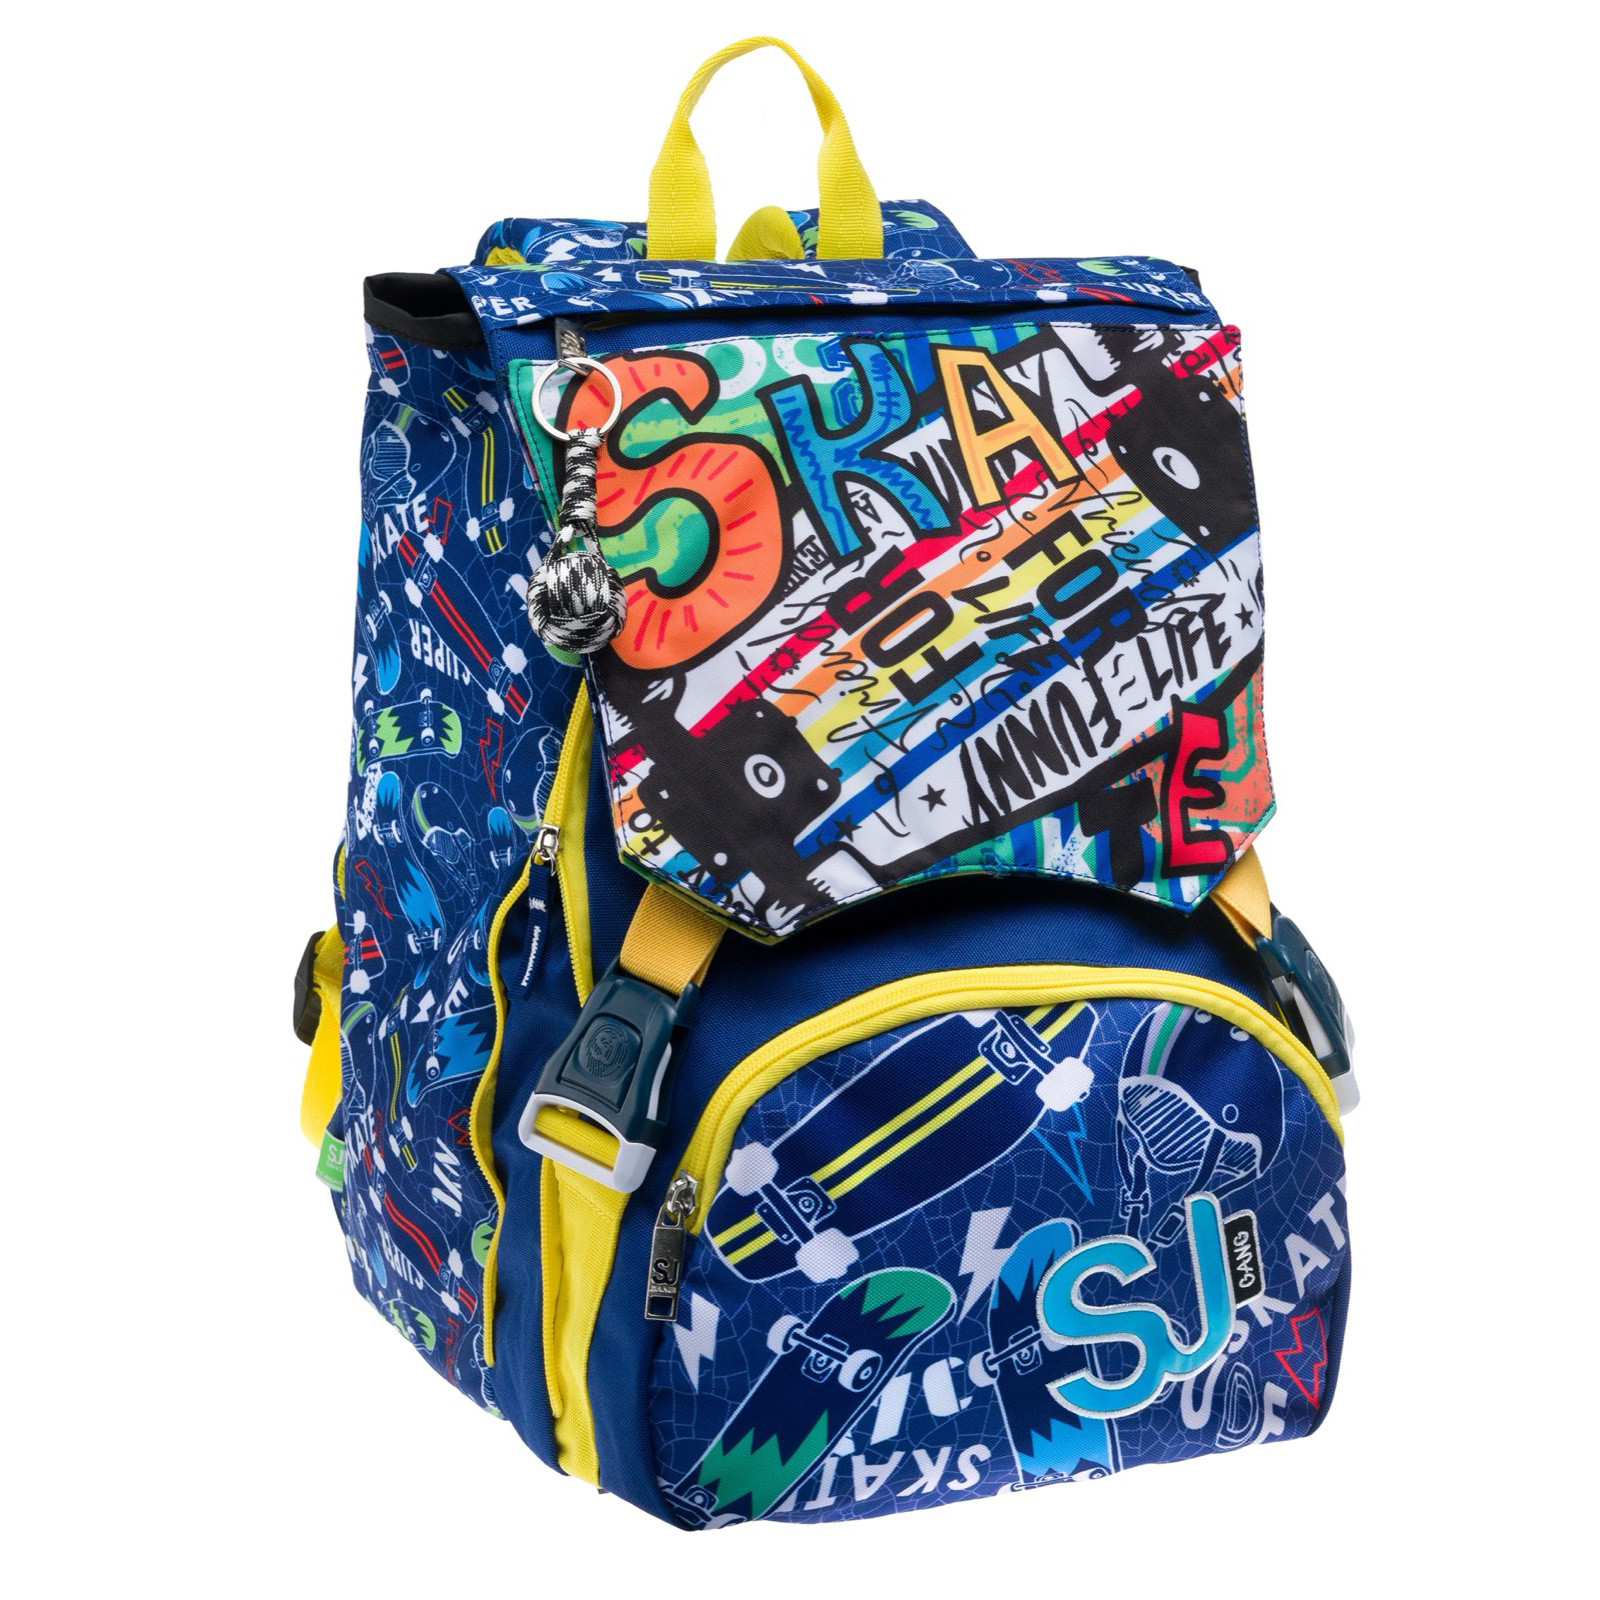 Expandable backpack - funny adventure boy, Blue, large image number 0